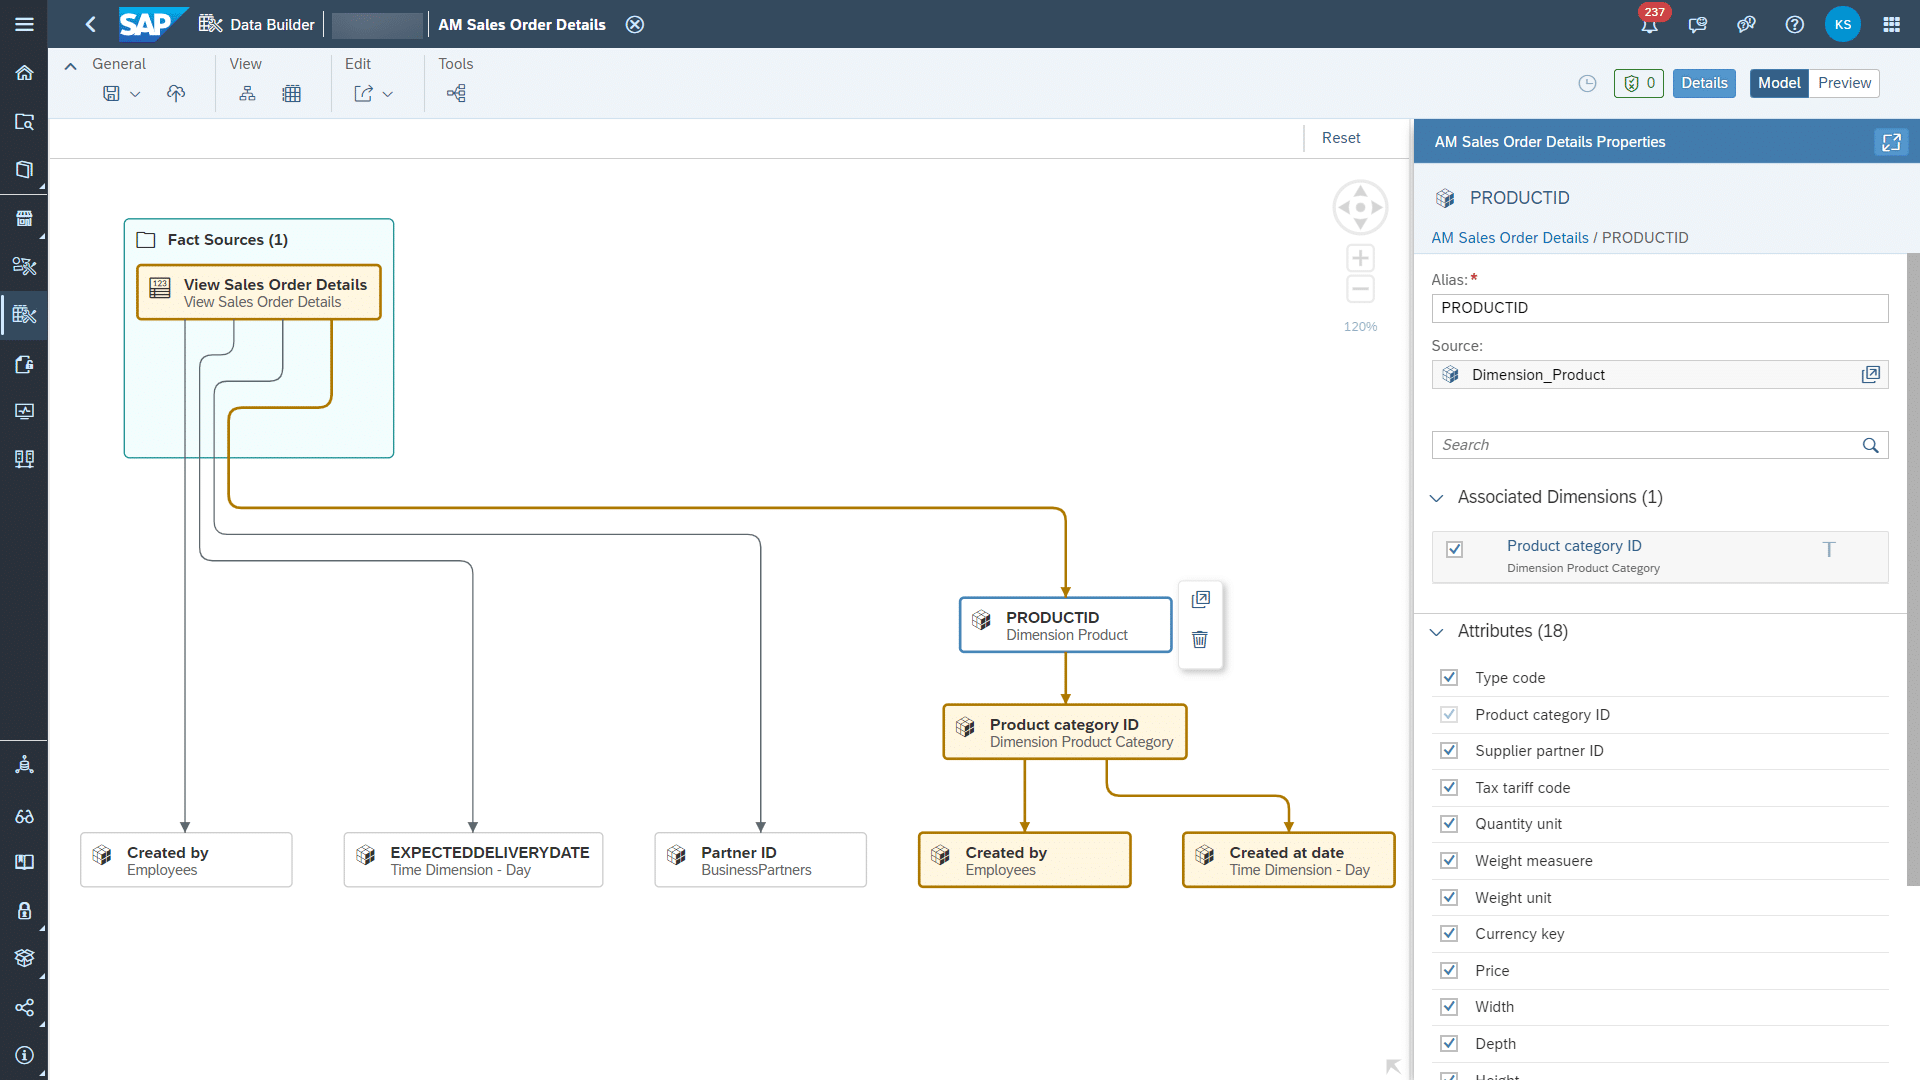 SAP Datasphere Analytic Model